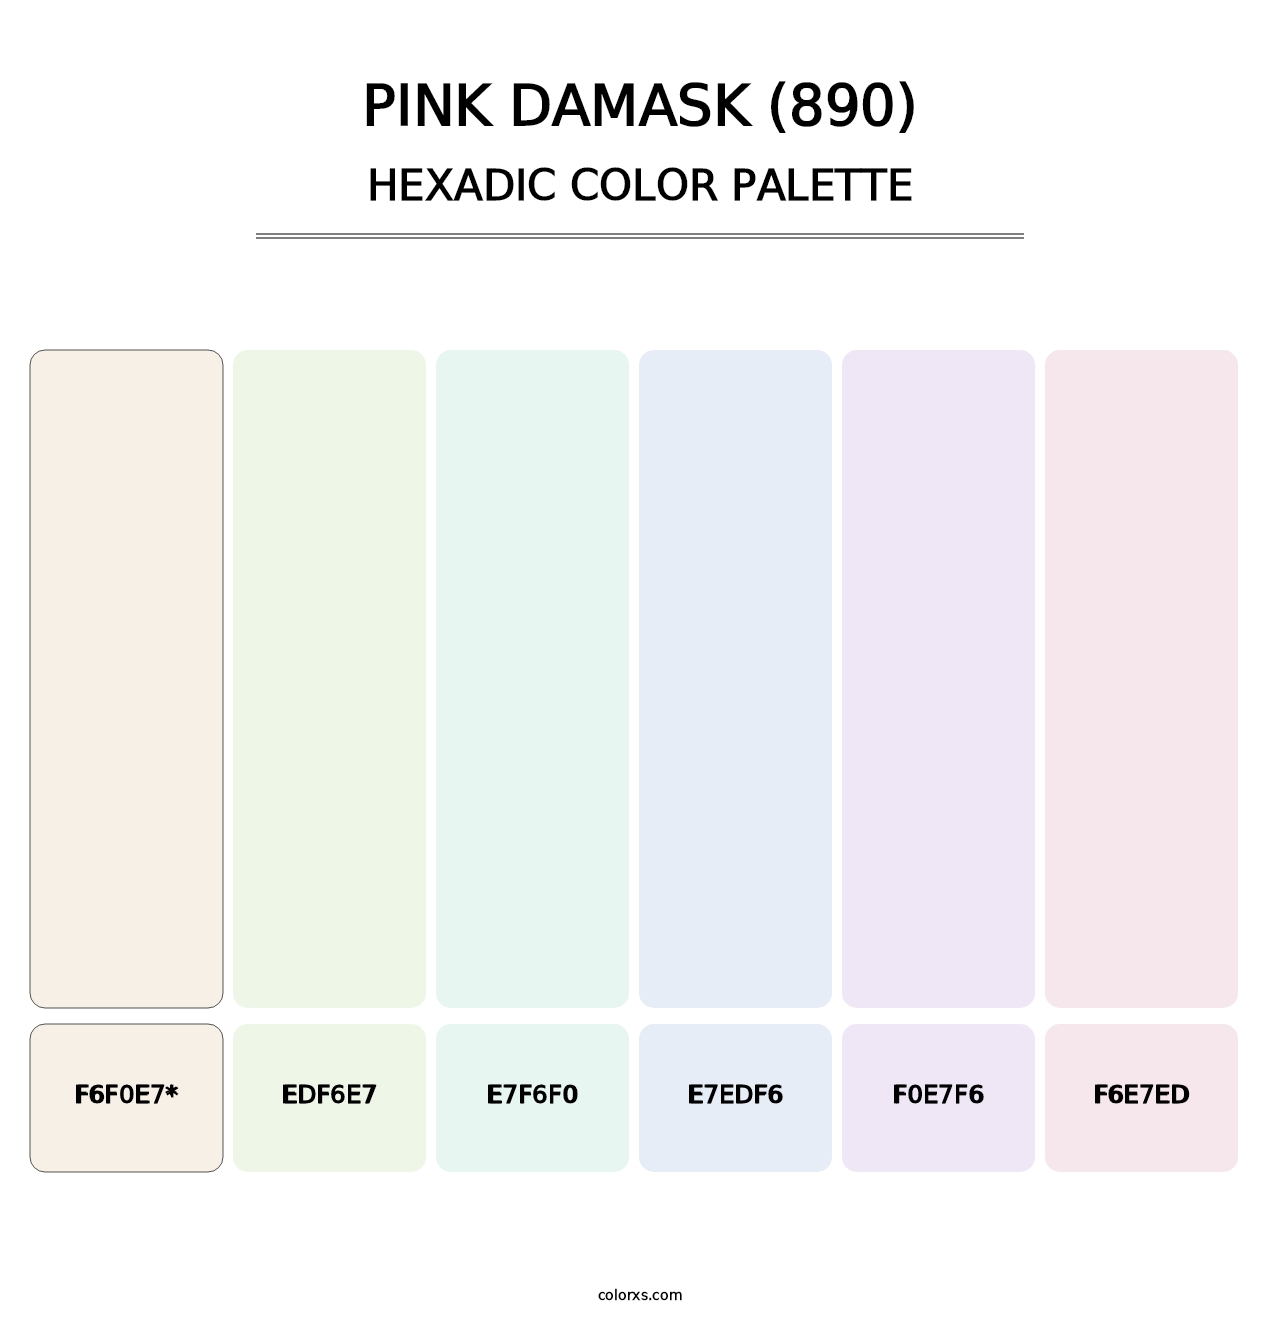 Pink Damask (890) - Hexadic Color Palette